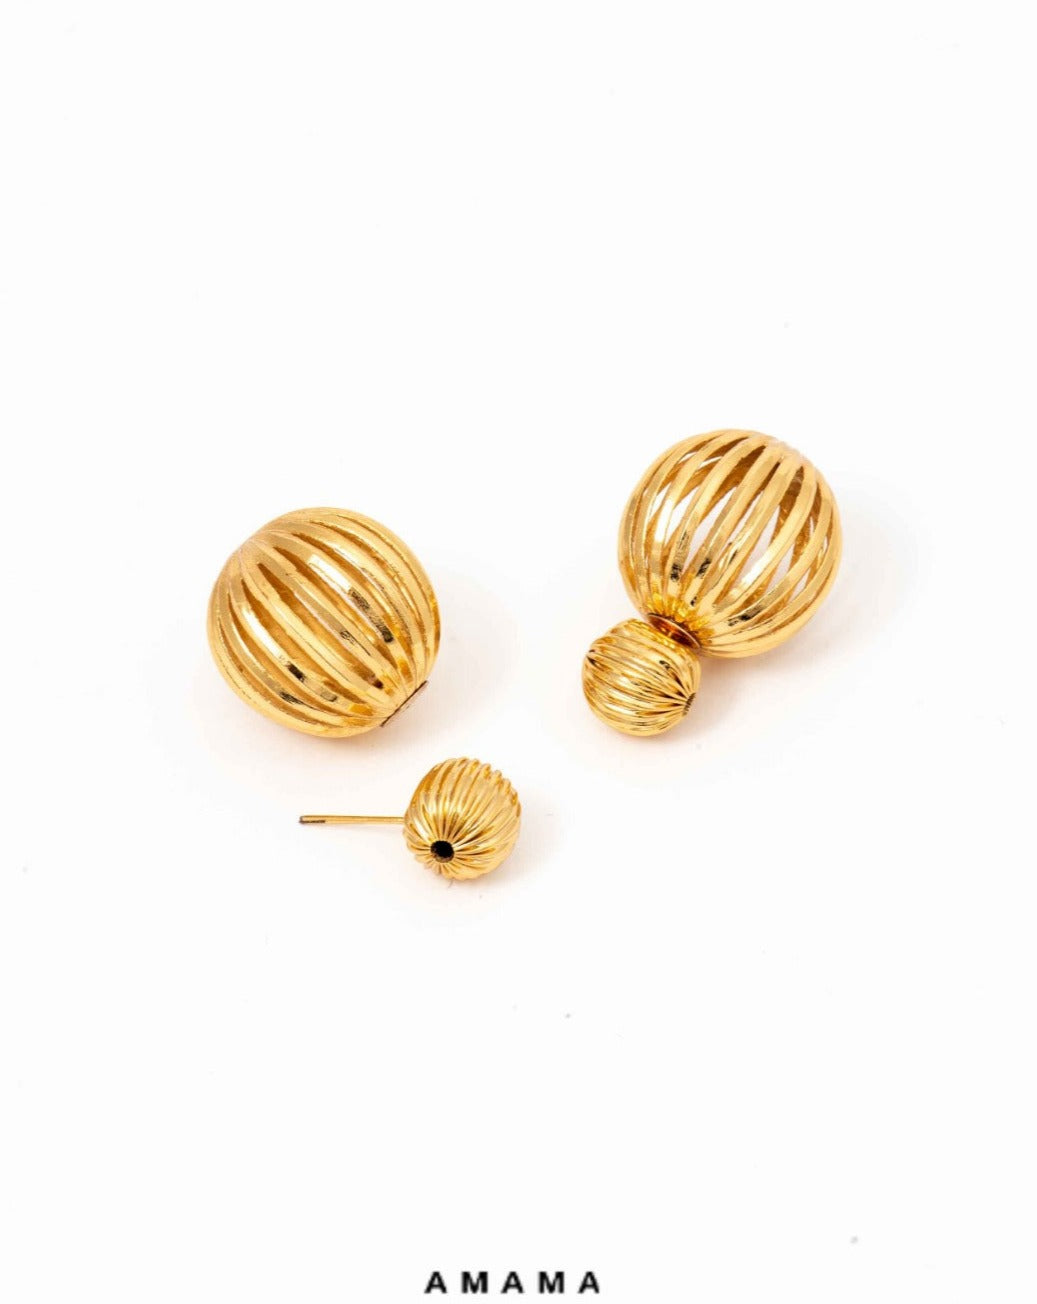 amama gold earrings